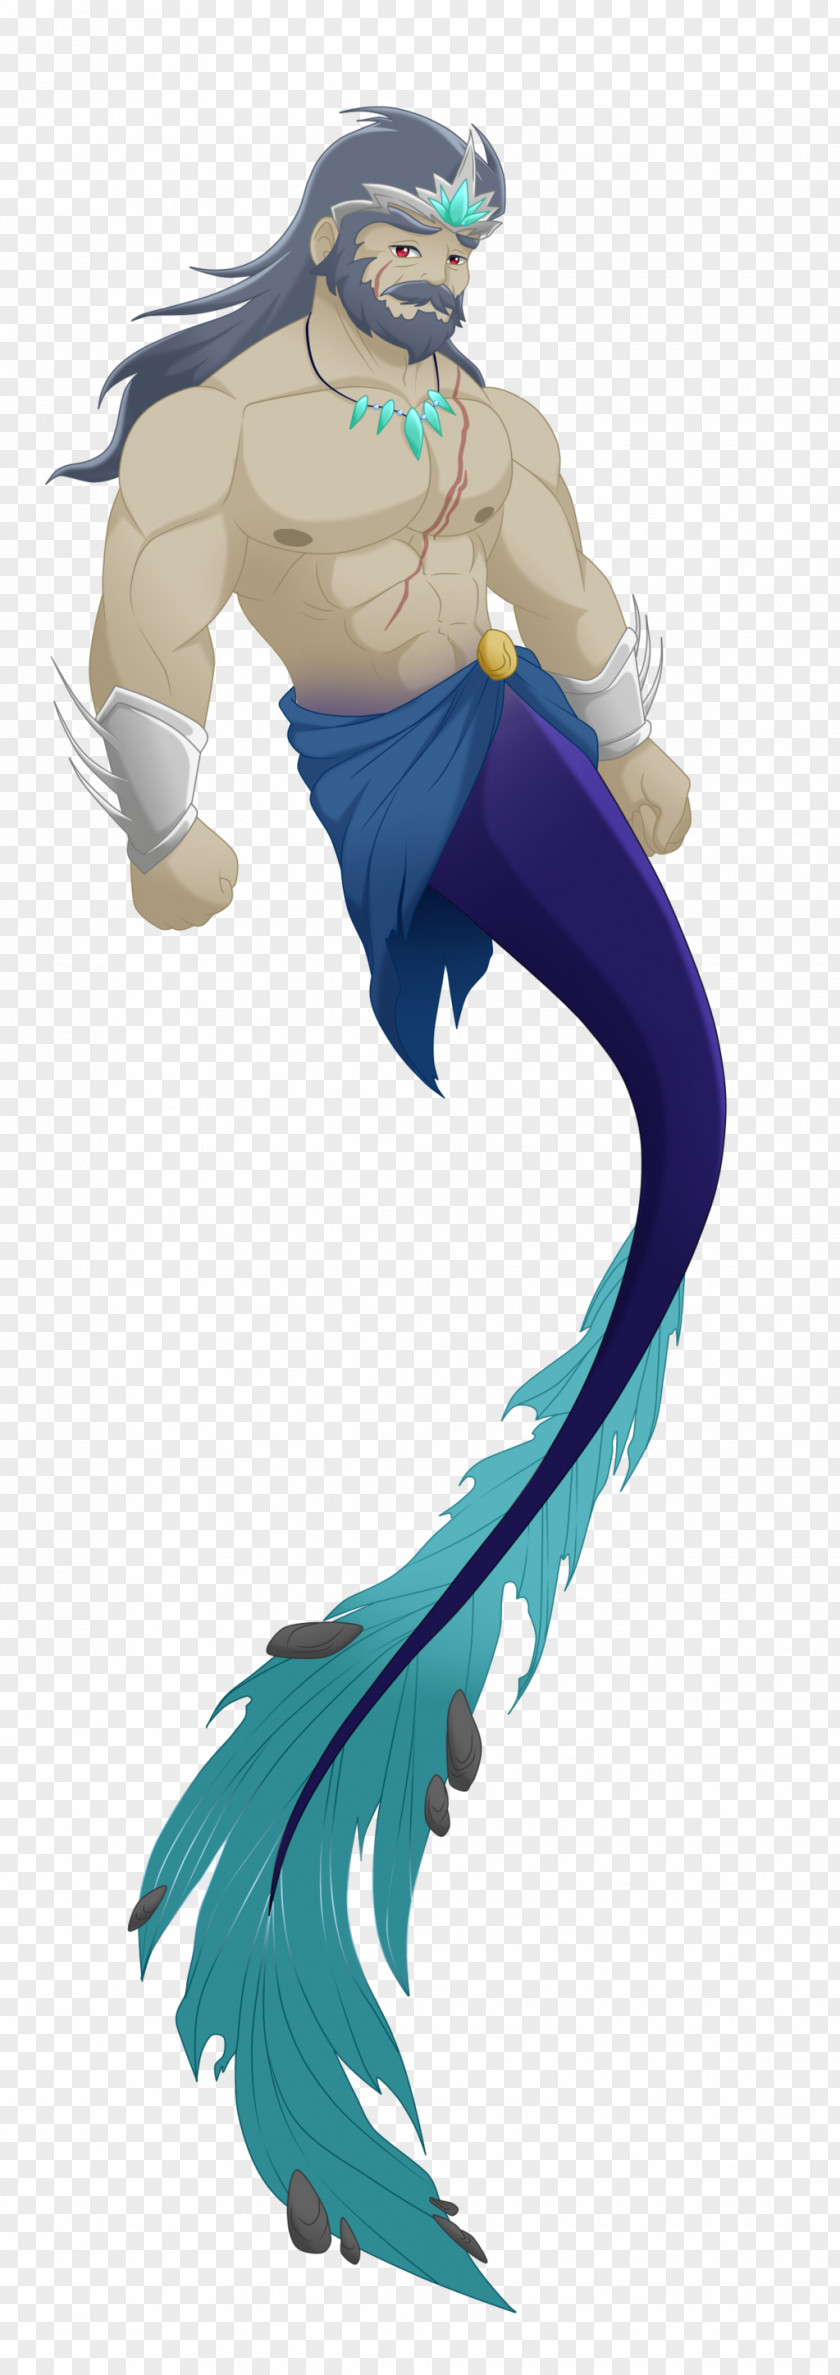 Mermaid Costume Design Cartoon PNG